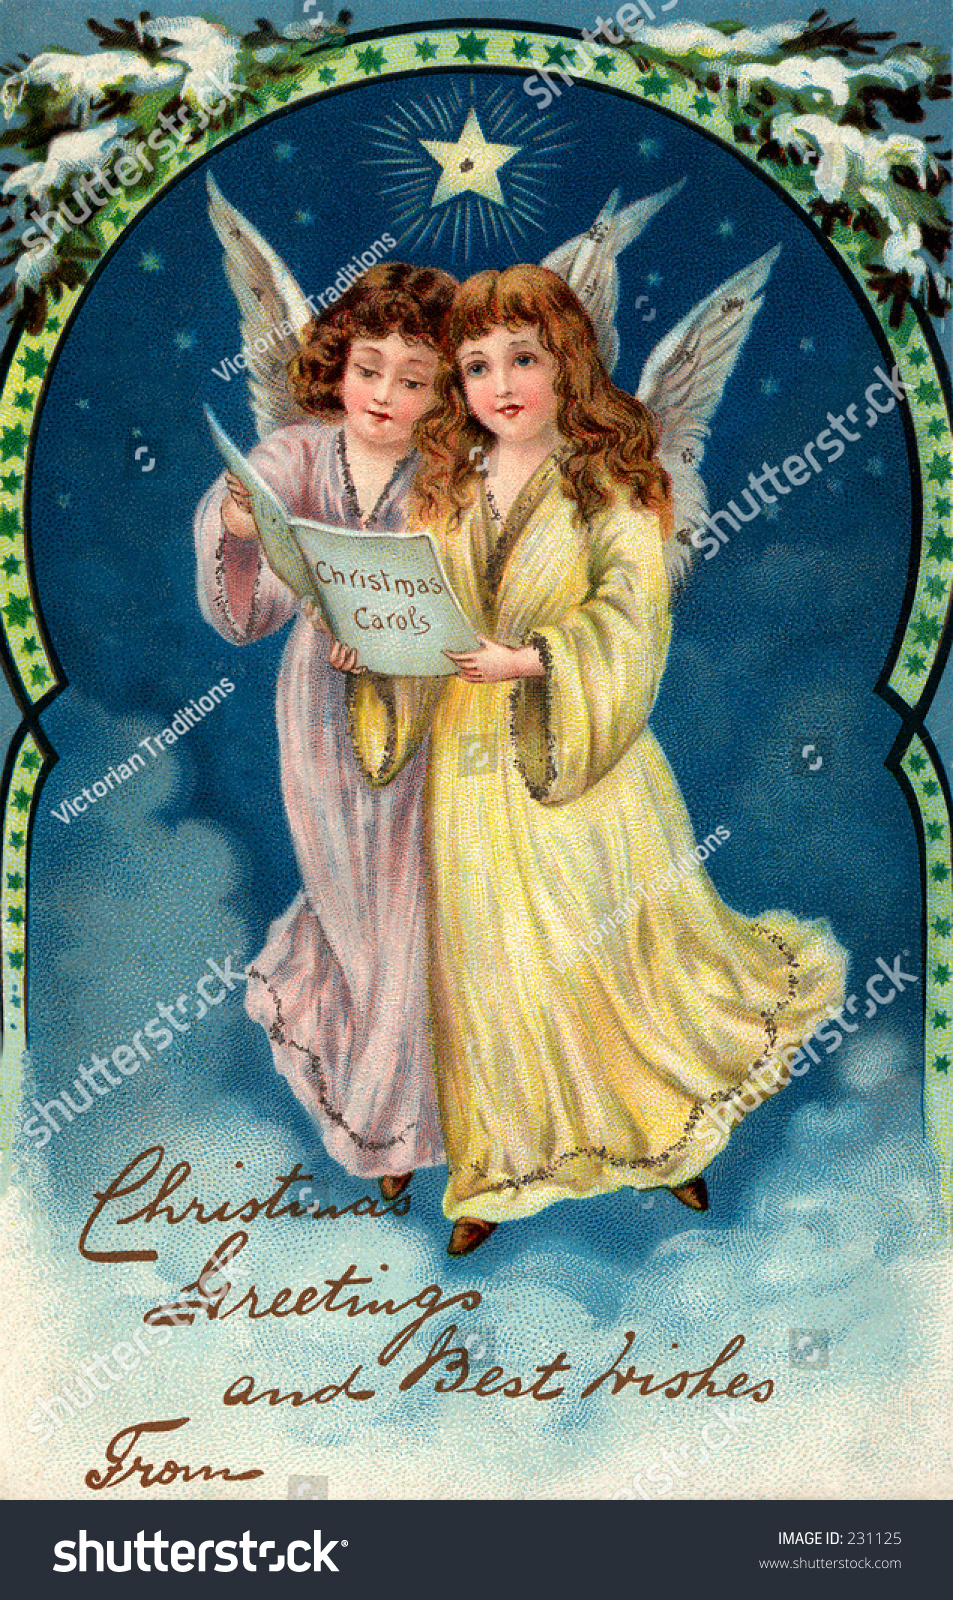 Christmas Angels - A 1910 Vintage Greeting Card Illustration - 231125 ...